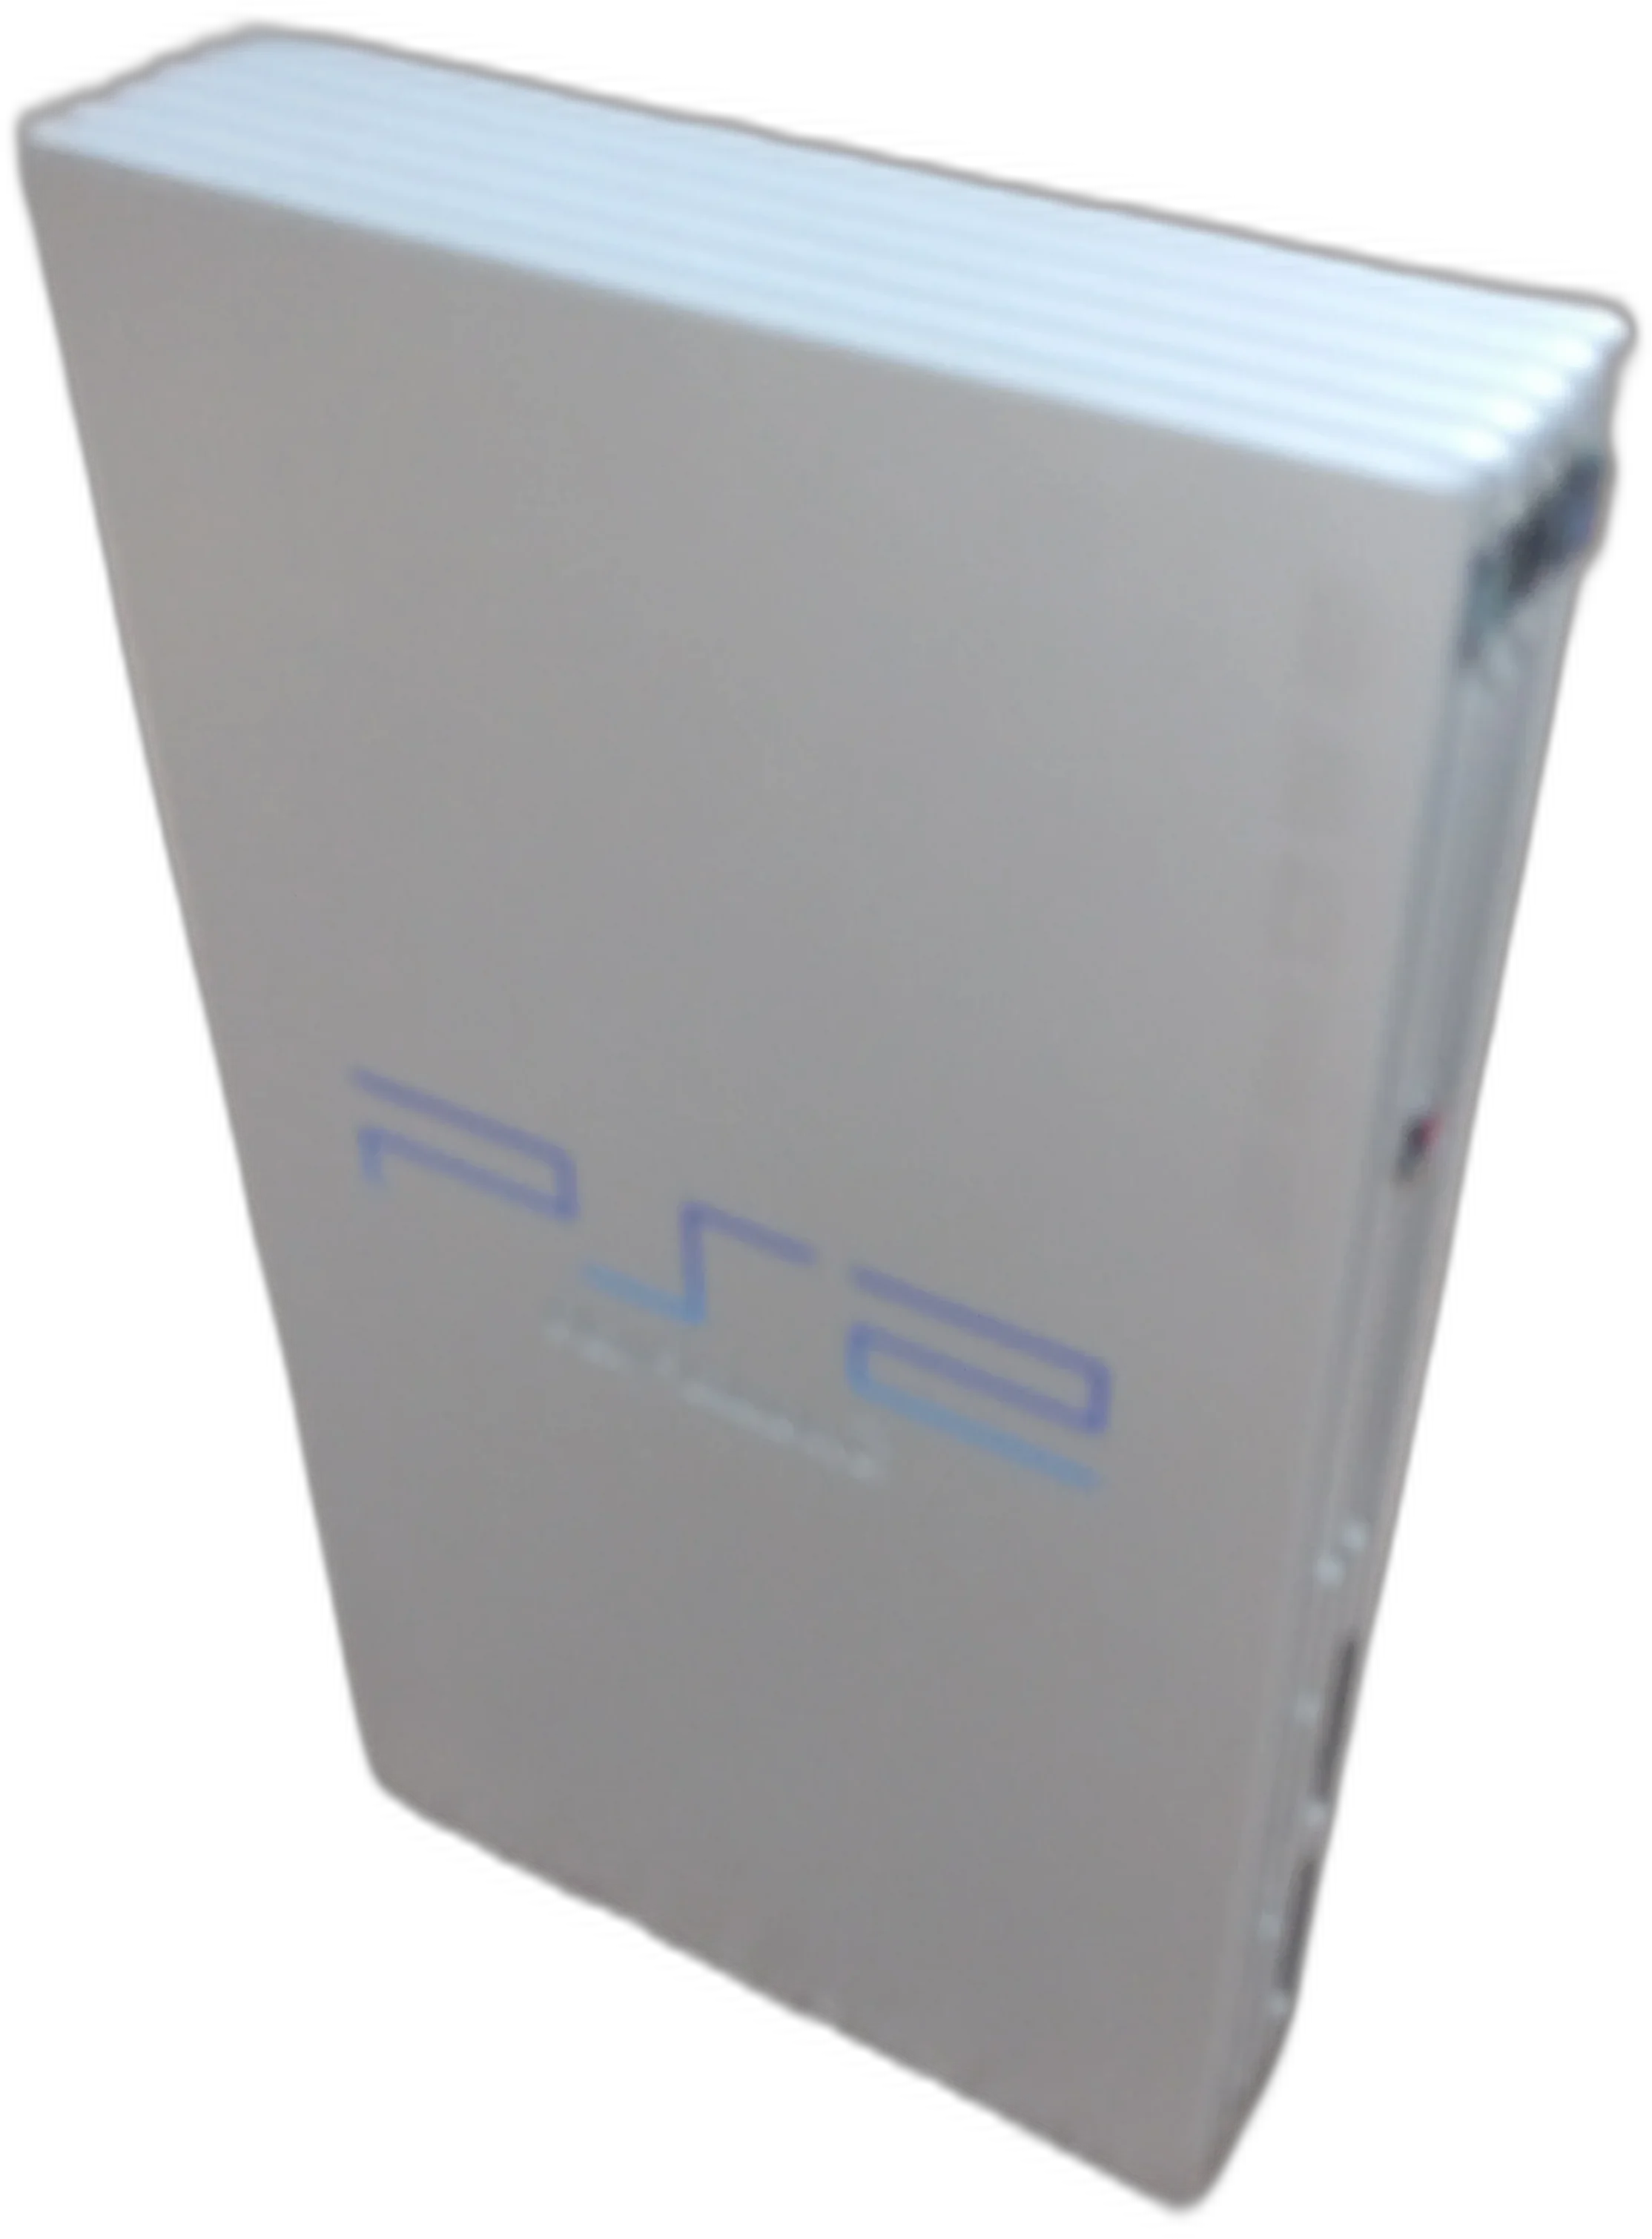  Sony PlayStation 2 Satin Silver Console - Prestige Line [EU]